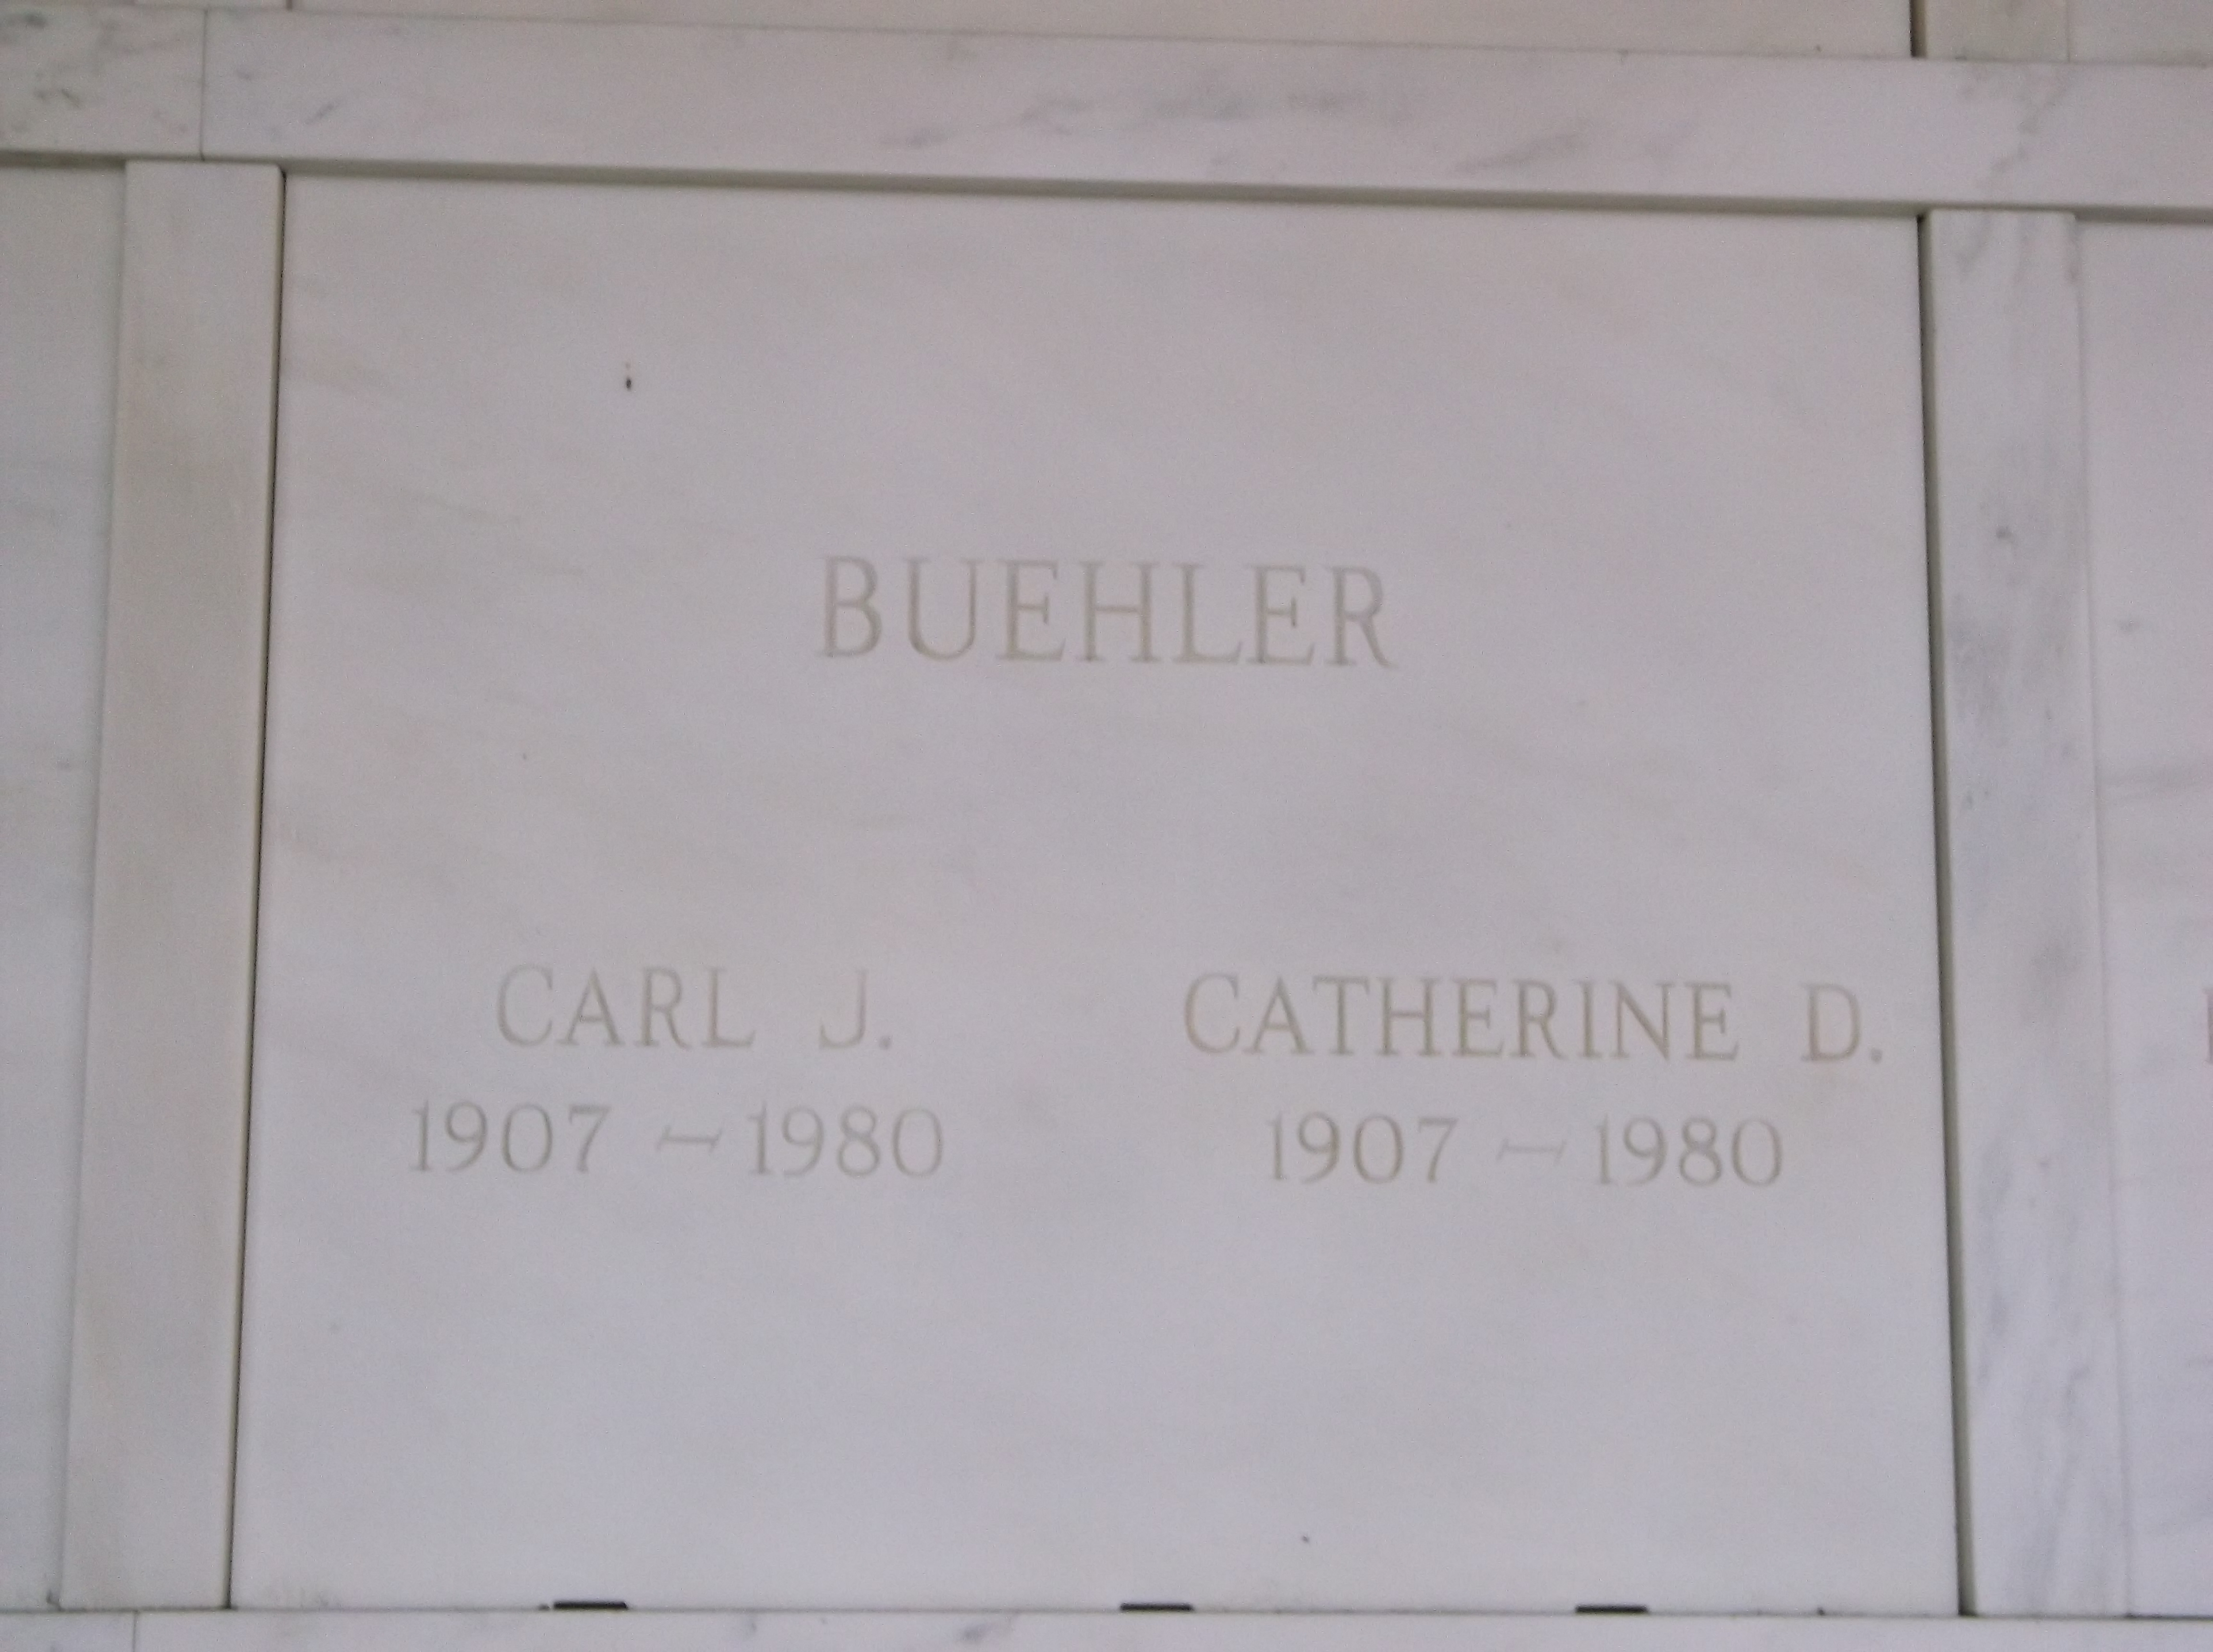 Carl J Buehler